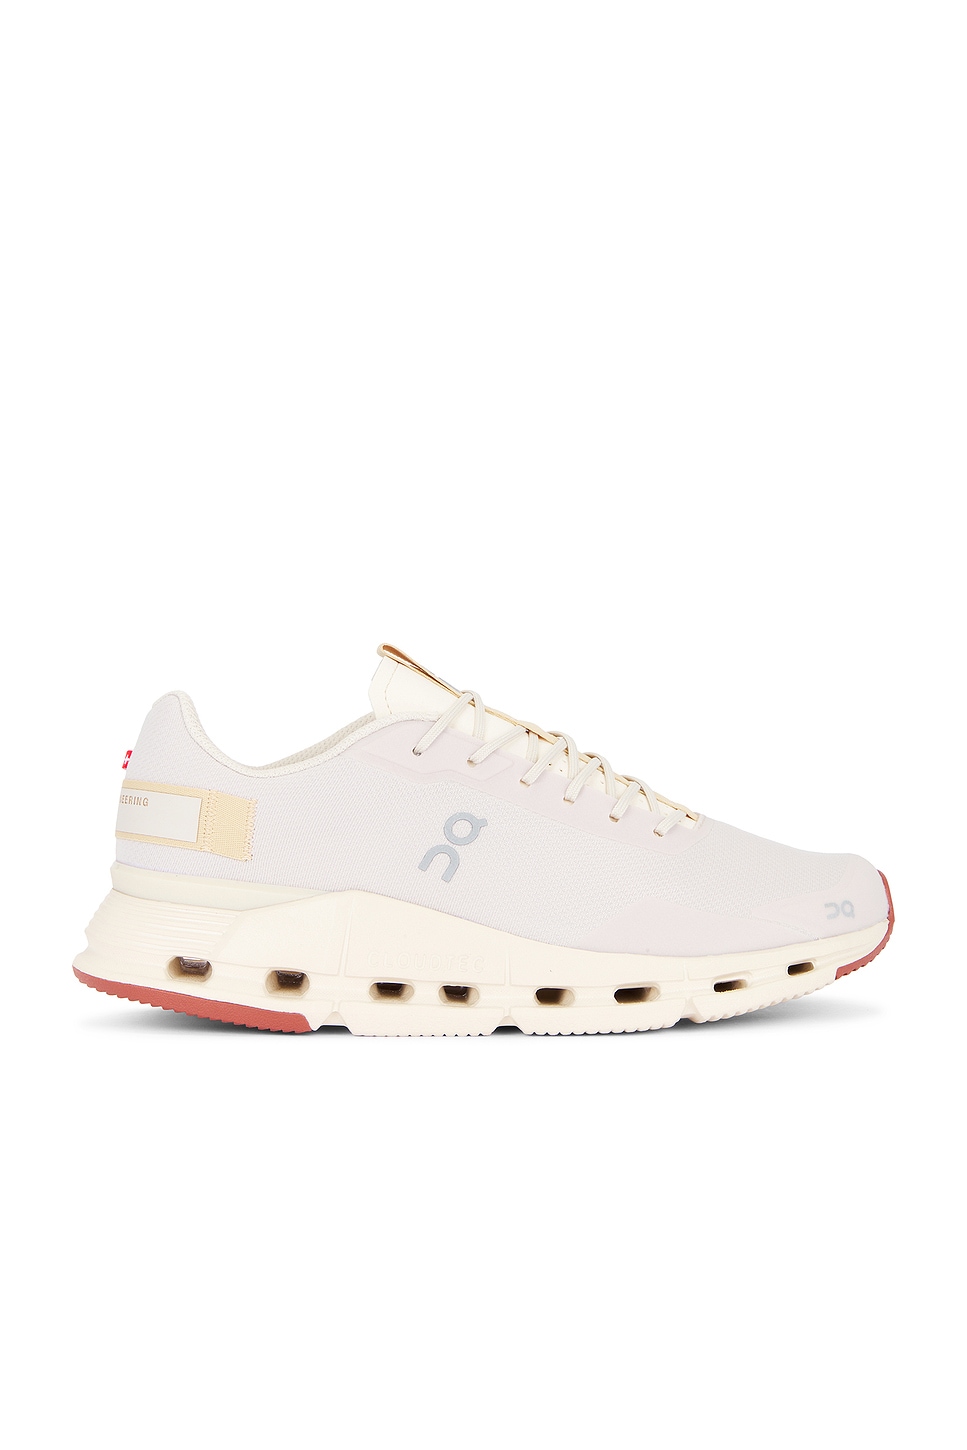 Cloudnova Form Sneaker in White